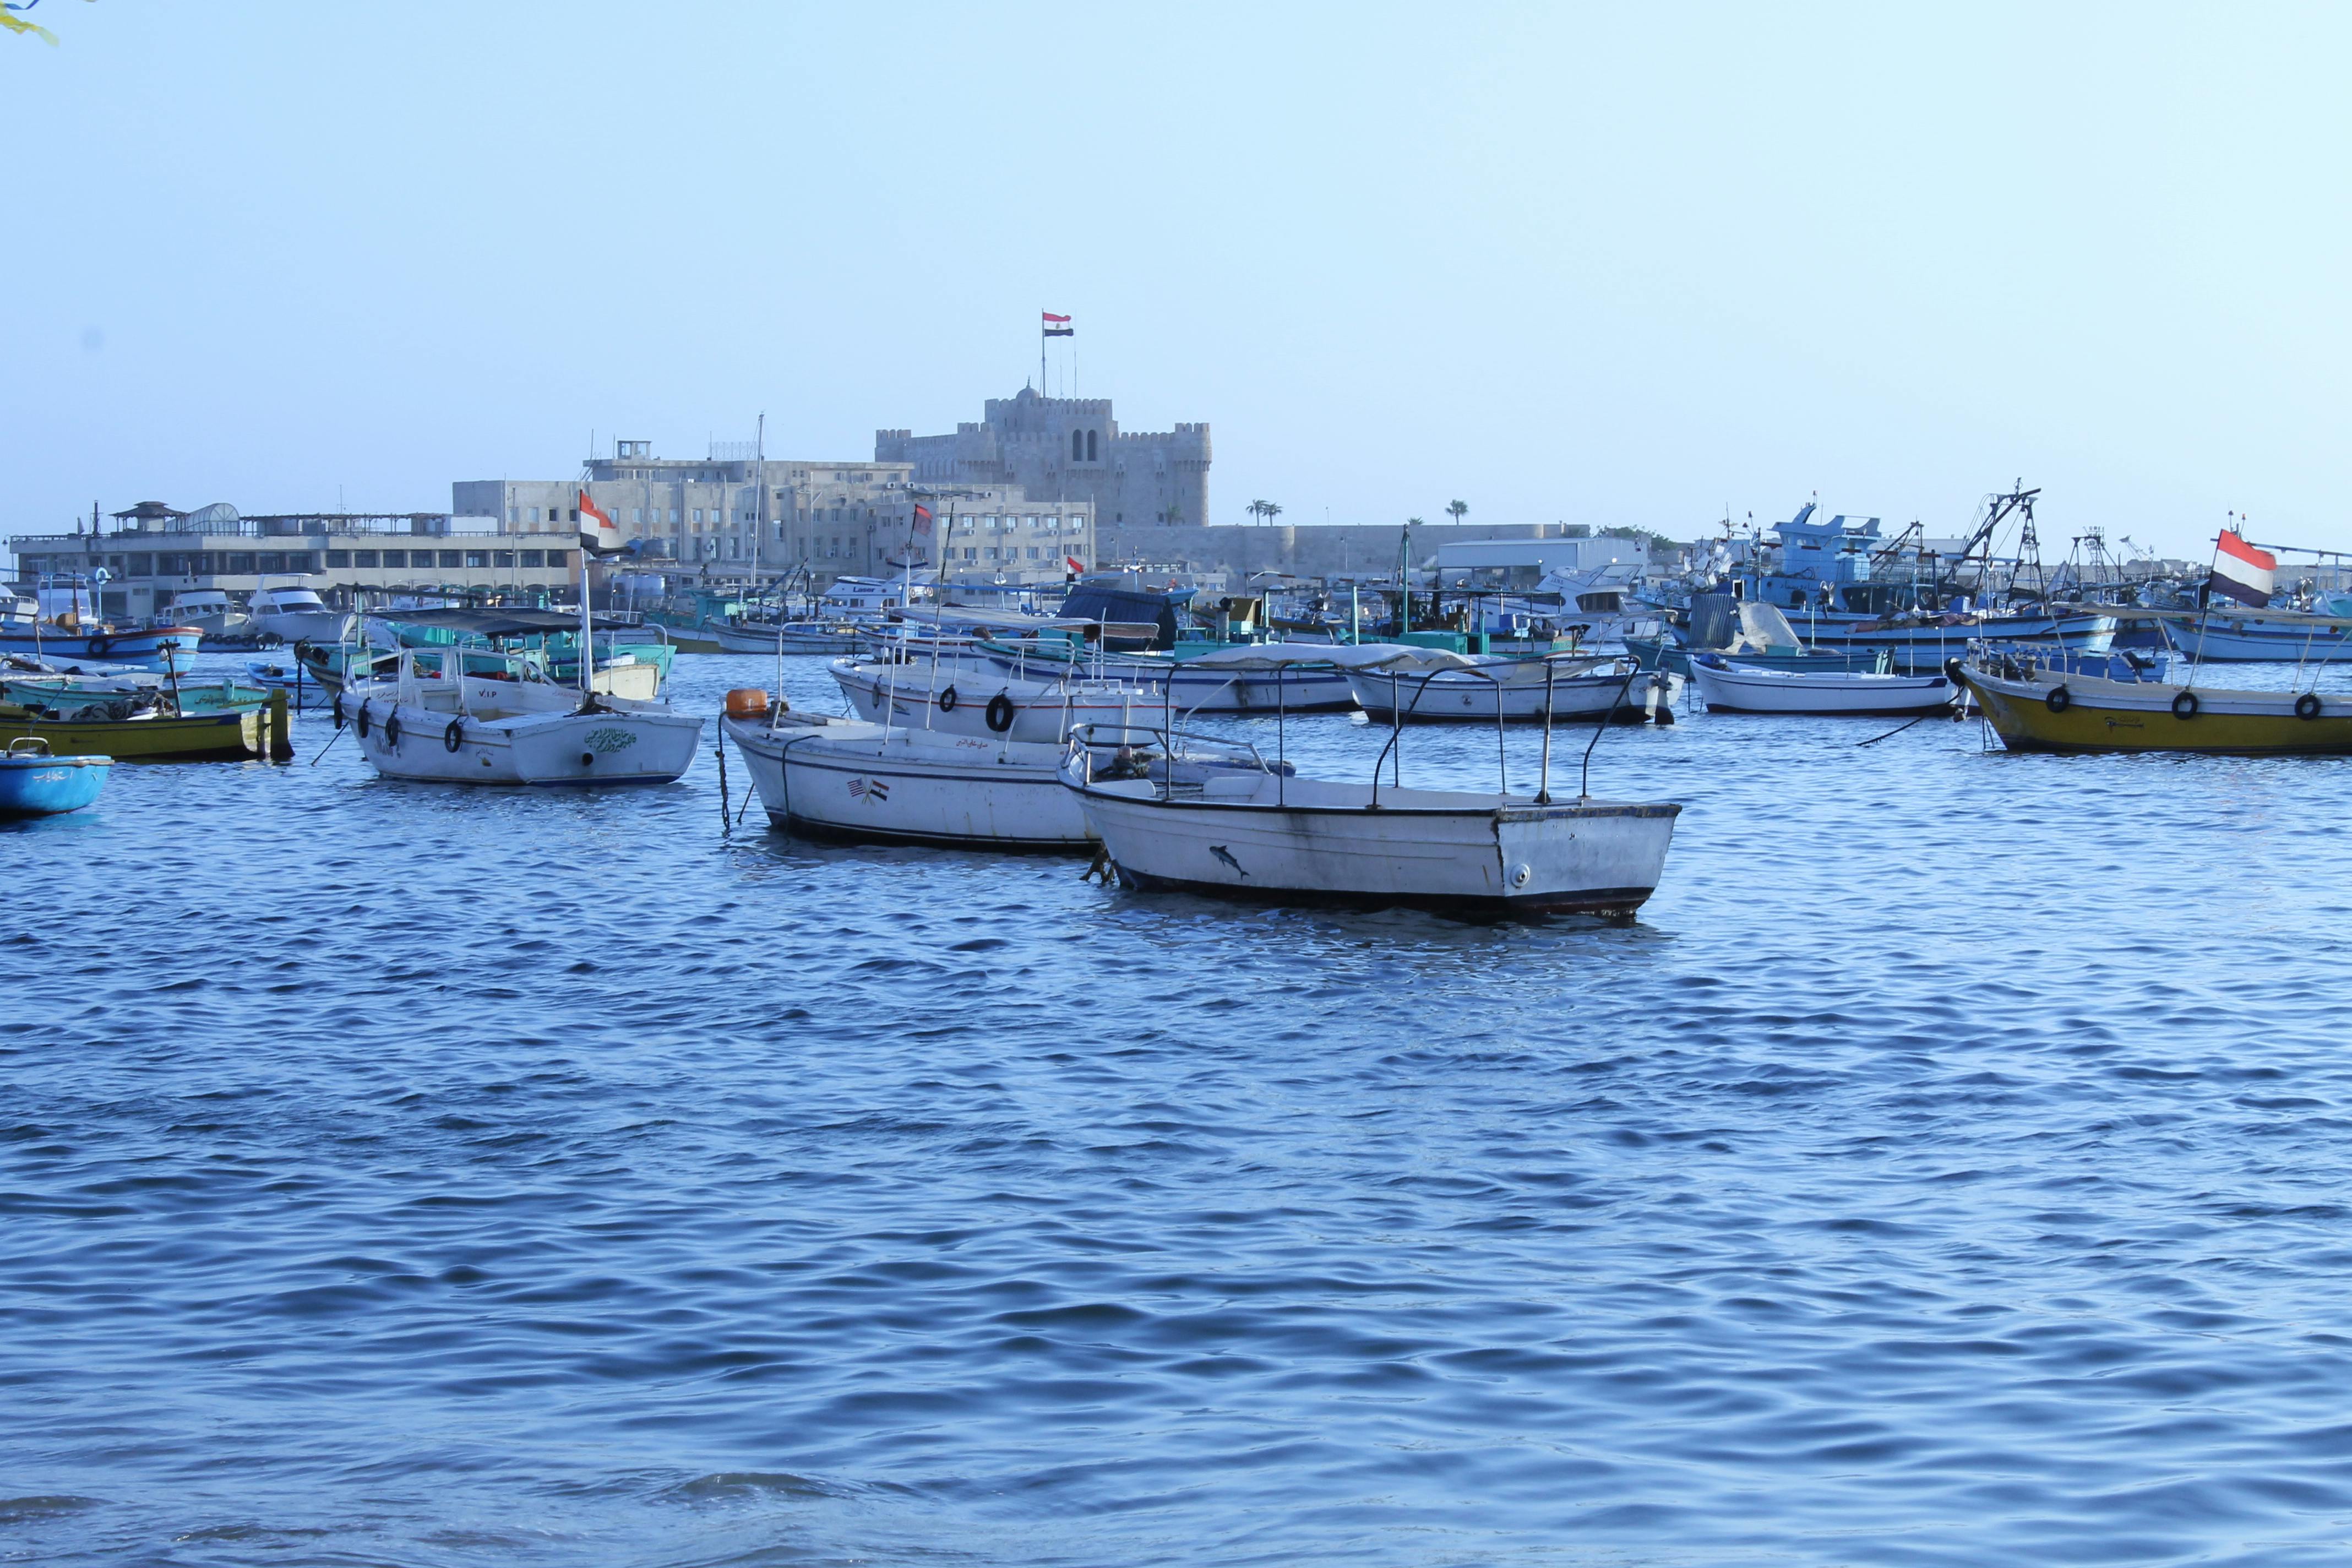 Free stock photo of Alexandria at the moorning, boats waiting to go fishing